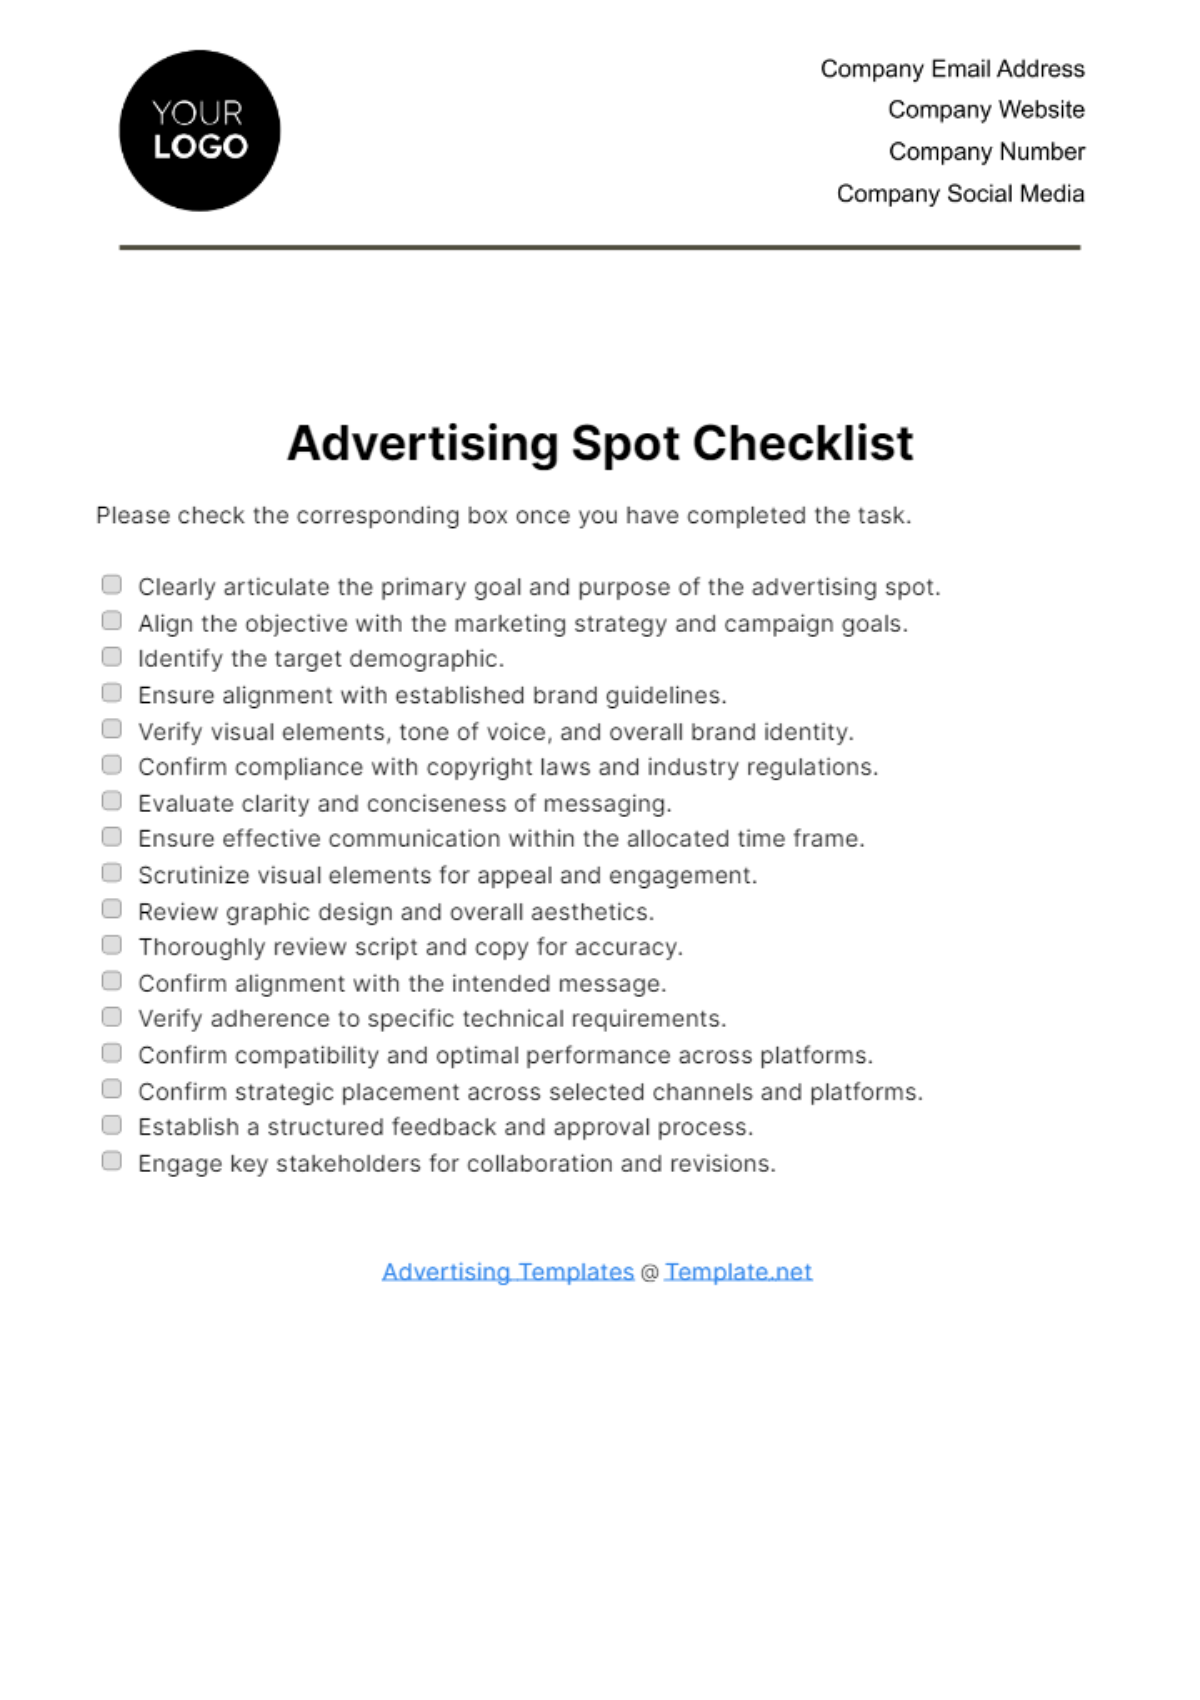 Advertising Spot Checklist Template